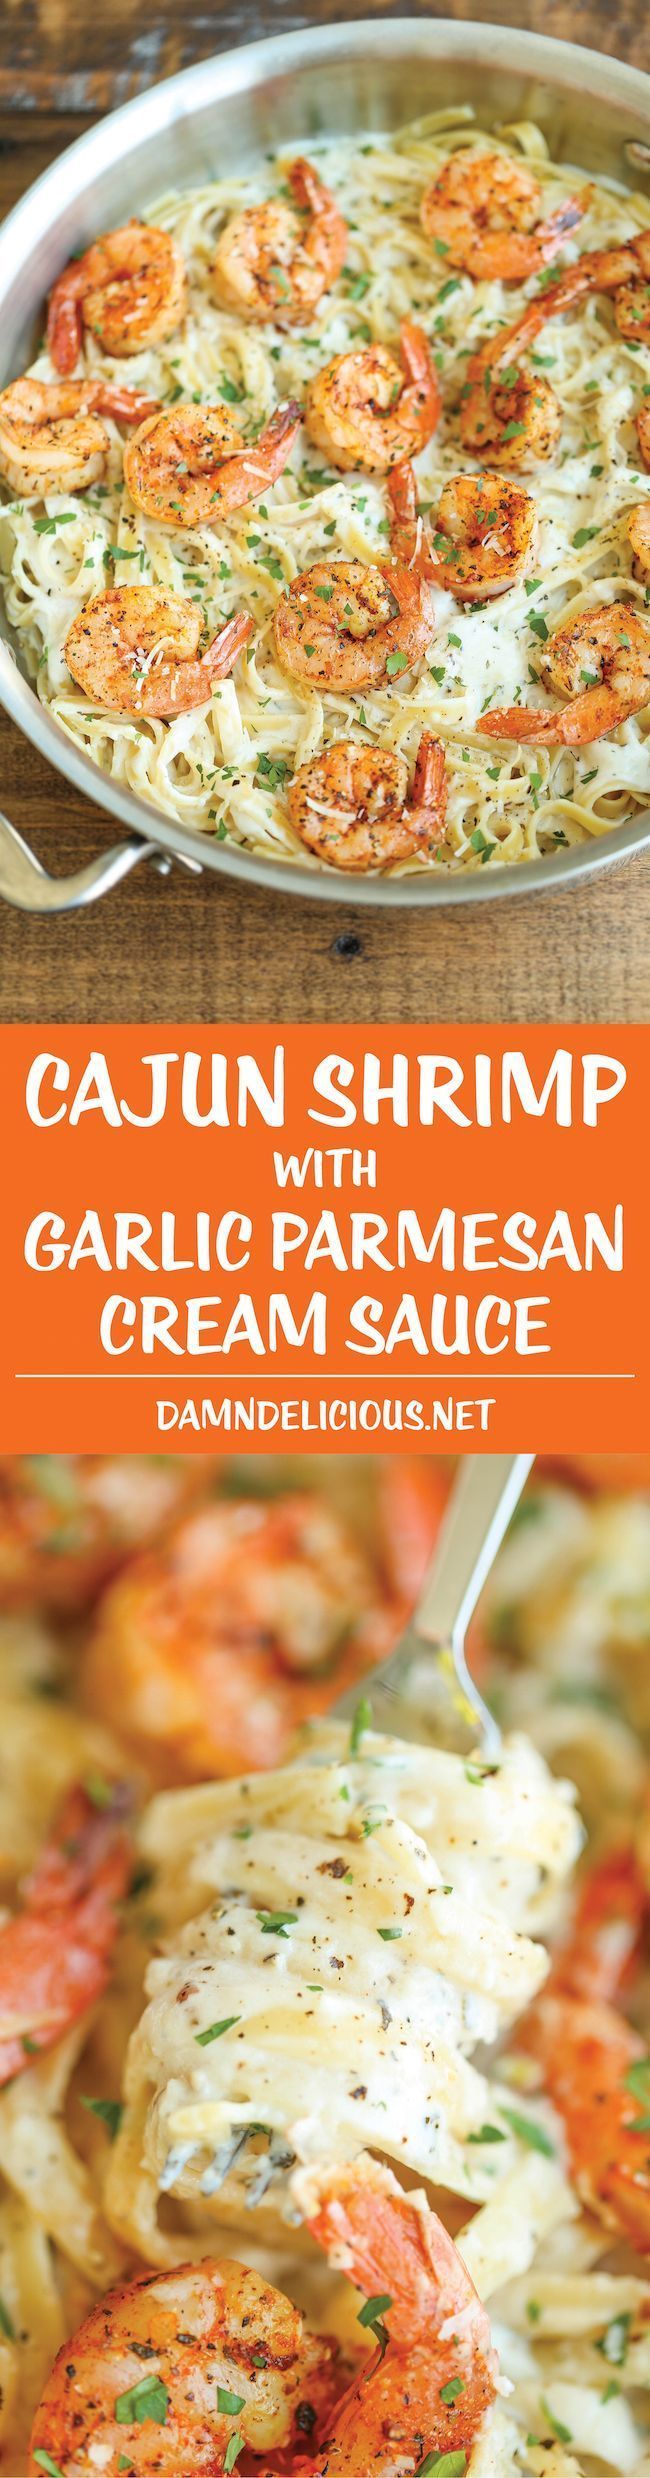 Cajun Shrimp with Garlic Parmesan Cream Sauce – The easiest weeknight meal with a homemade cream sauce tha